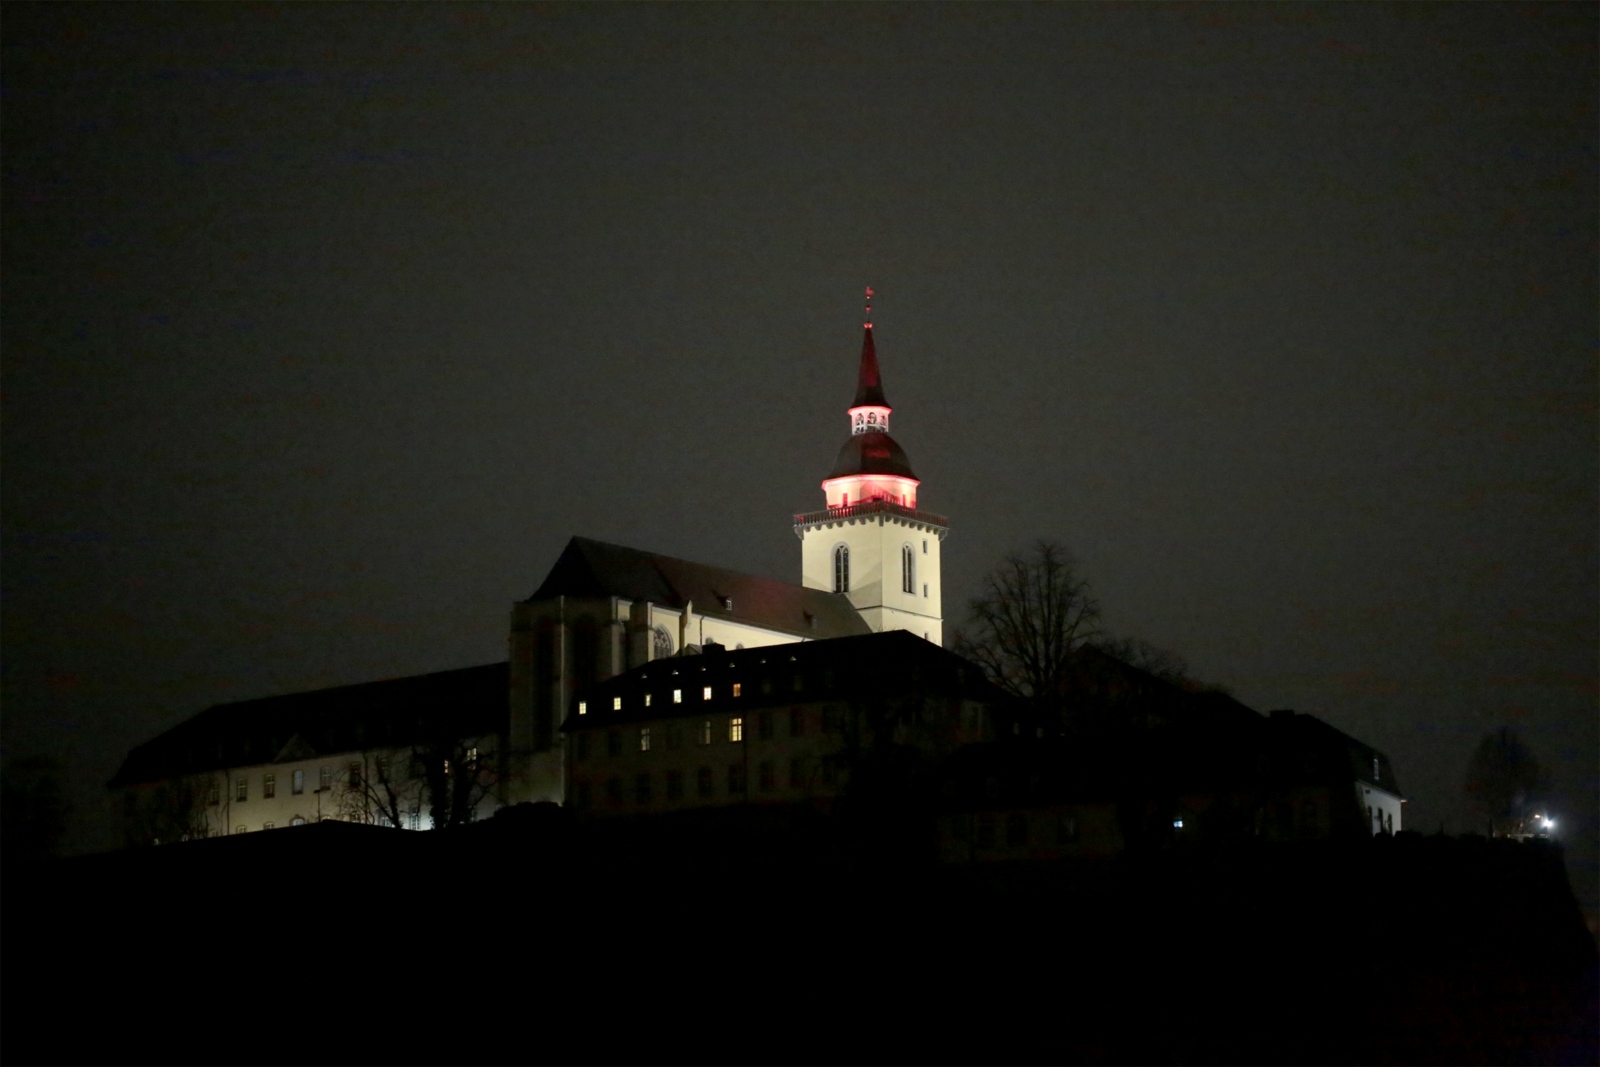 Abteikirchturm mit roter Turmspitze